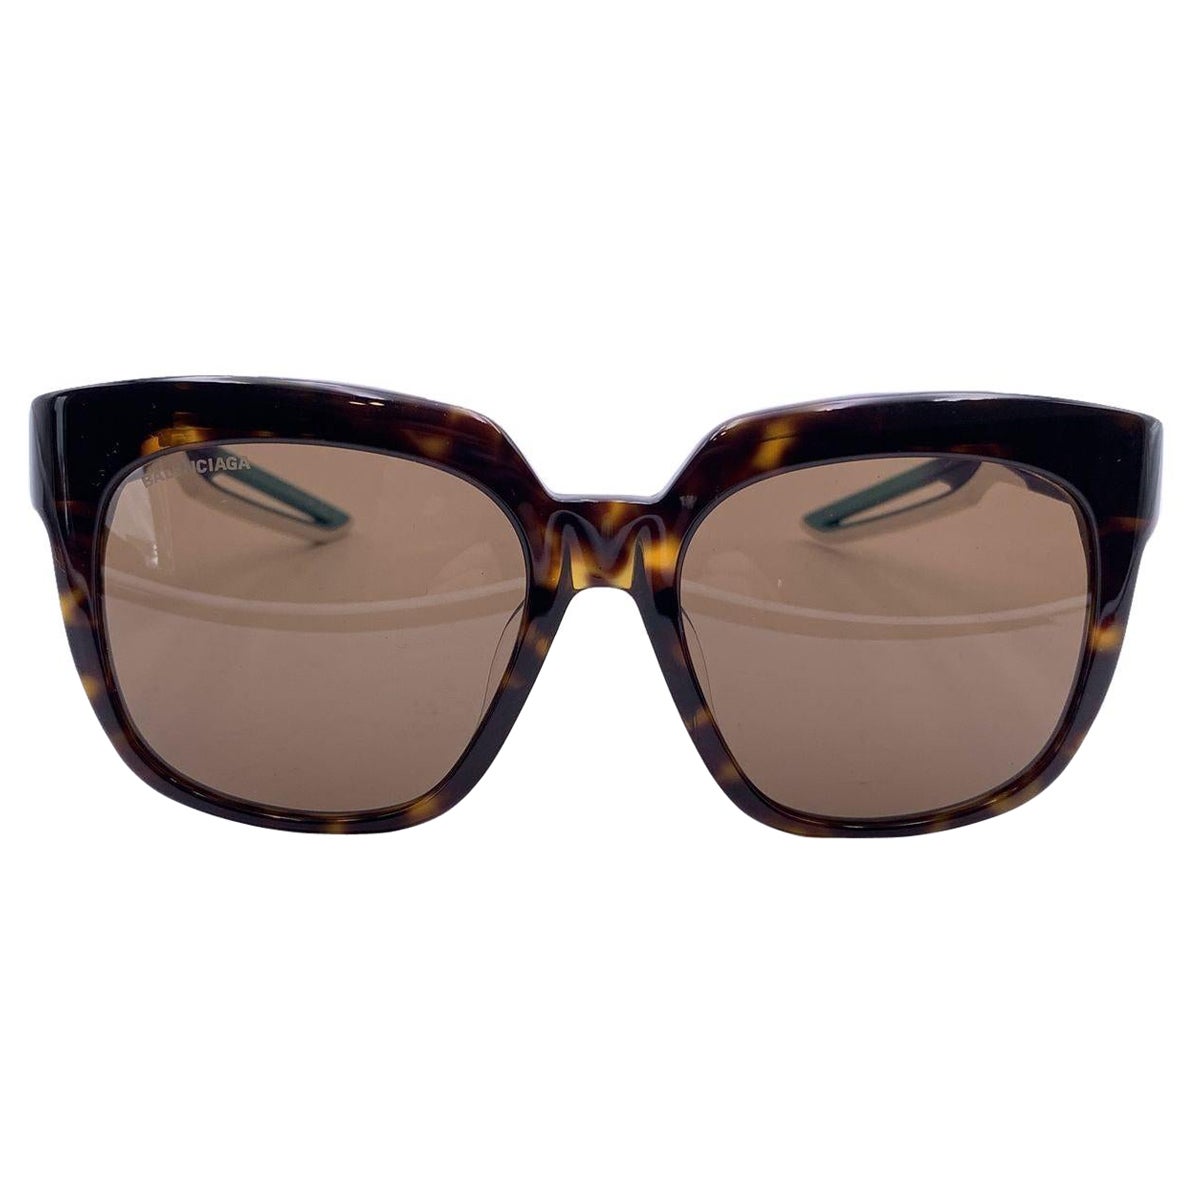 Balenciaga Brown TripleS Squared Sunglasses BB0025SA 55/19 135mm